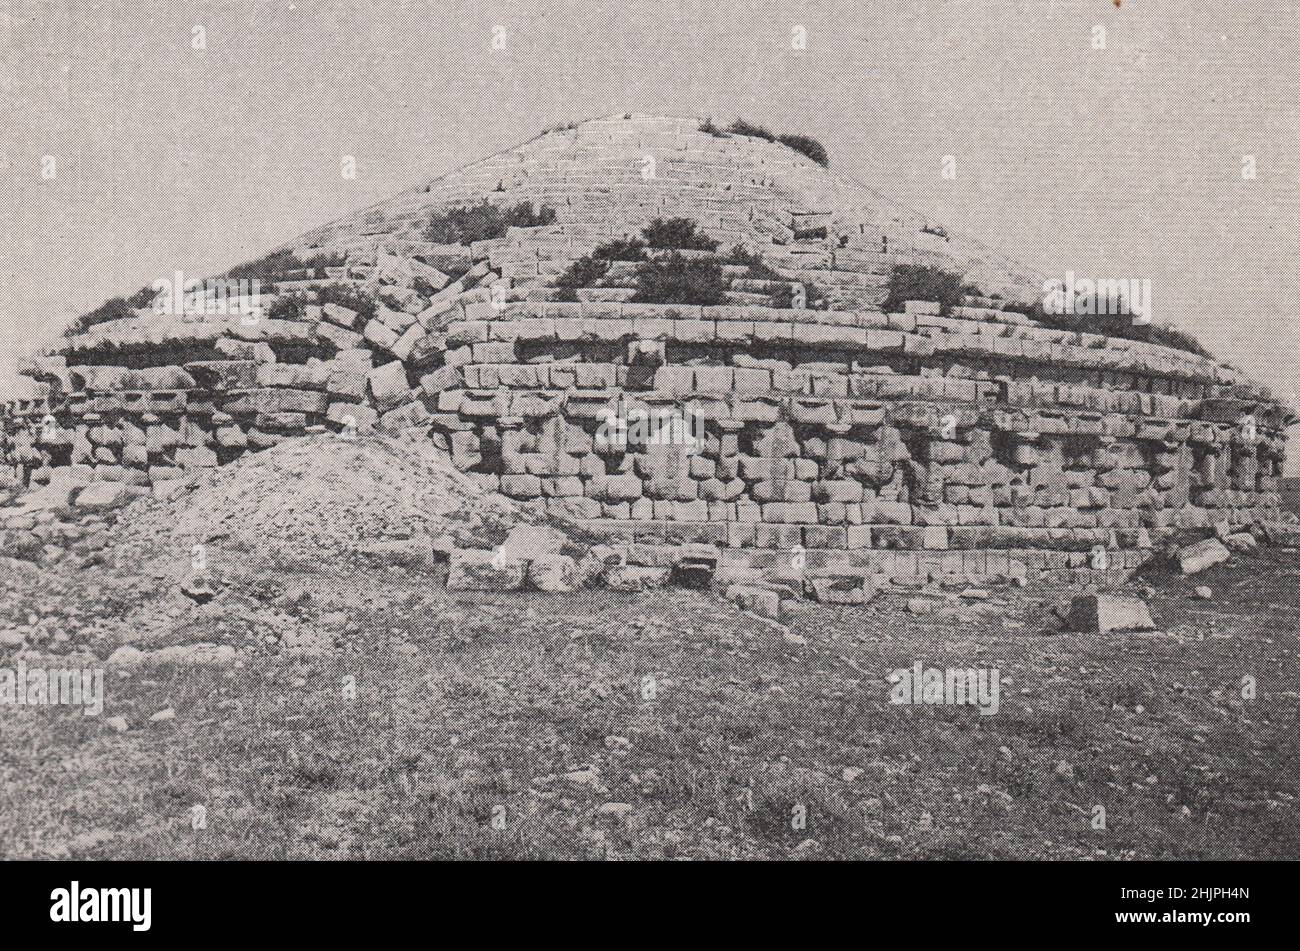 Massinissa's tomb of Tufa blocks ravaged by thieves and time. Algeria. Barbary States (1923) Stock Photo